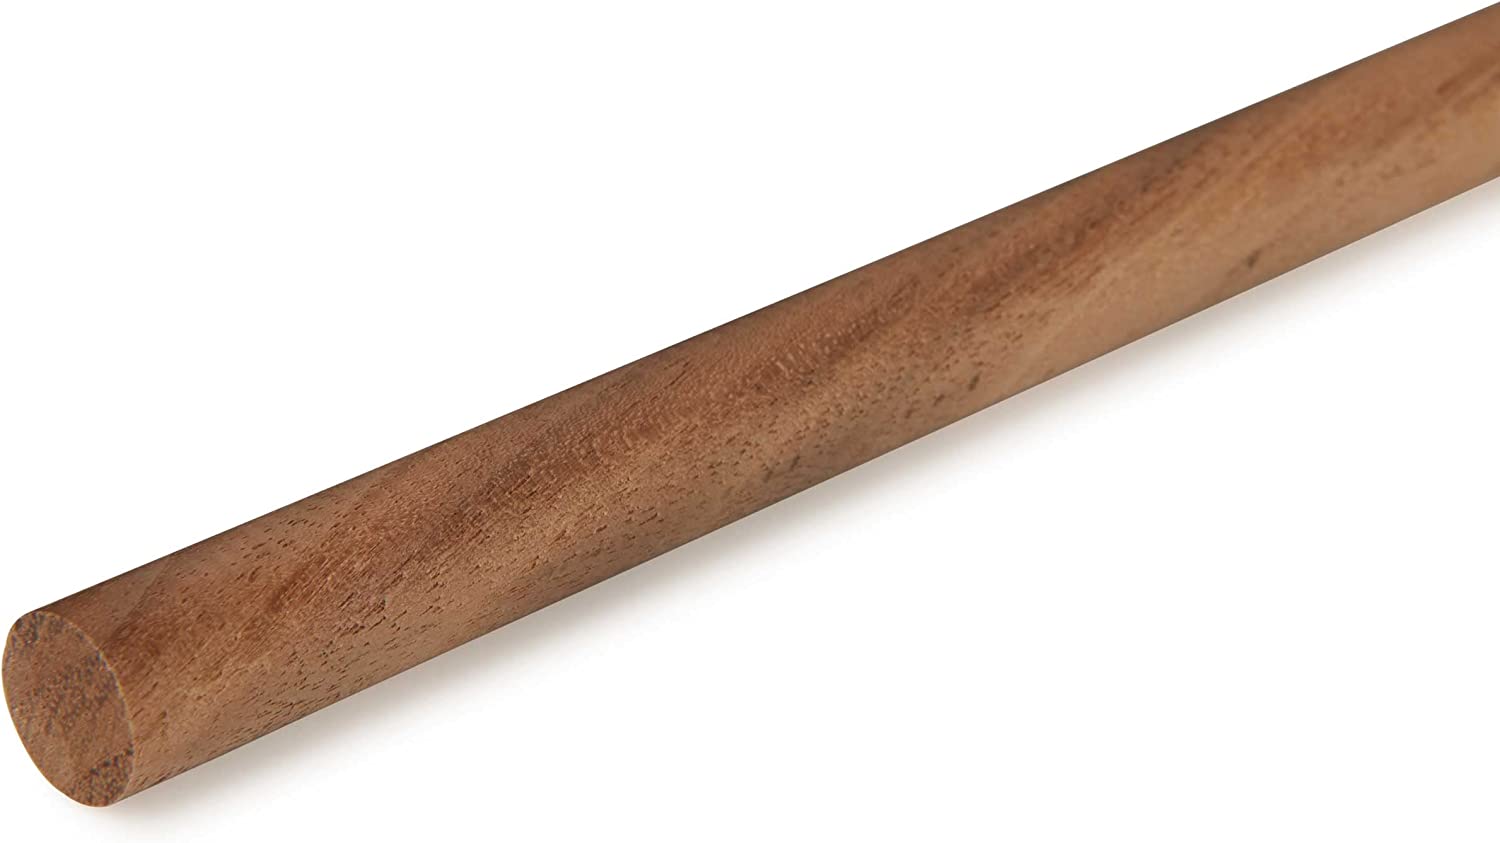  VENTRAL 3/4 Inch Walnut Dowel Rod Sticks Unfinished Wood for  Hobby Crafts Black Walnut Length 6'' (1 Piece) (DR000-20-07-0706-001)